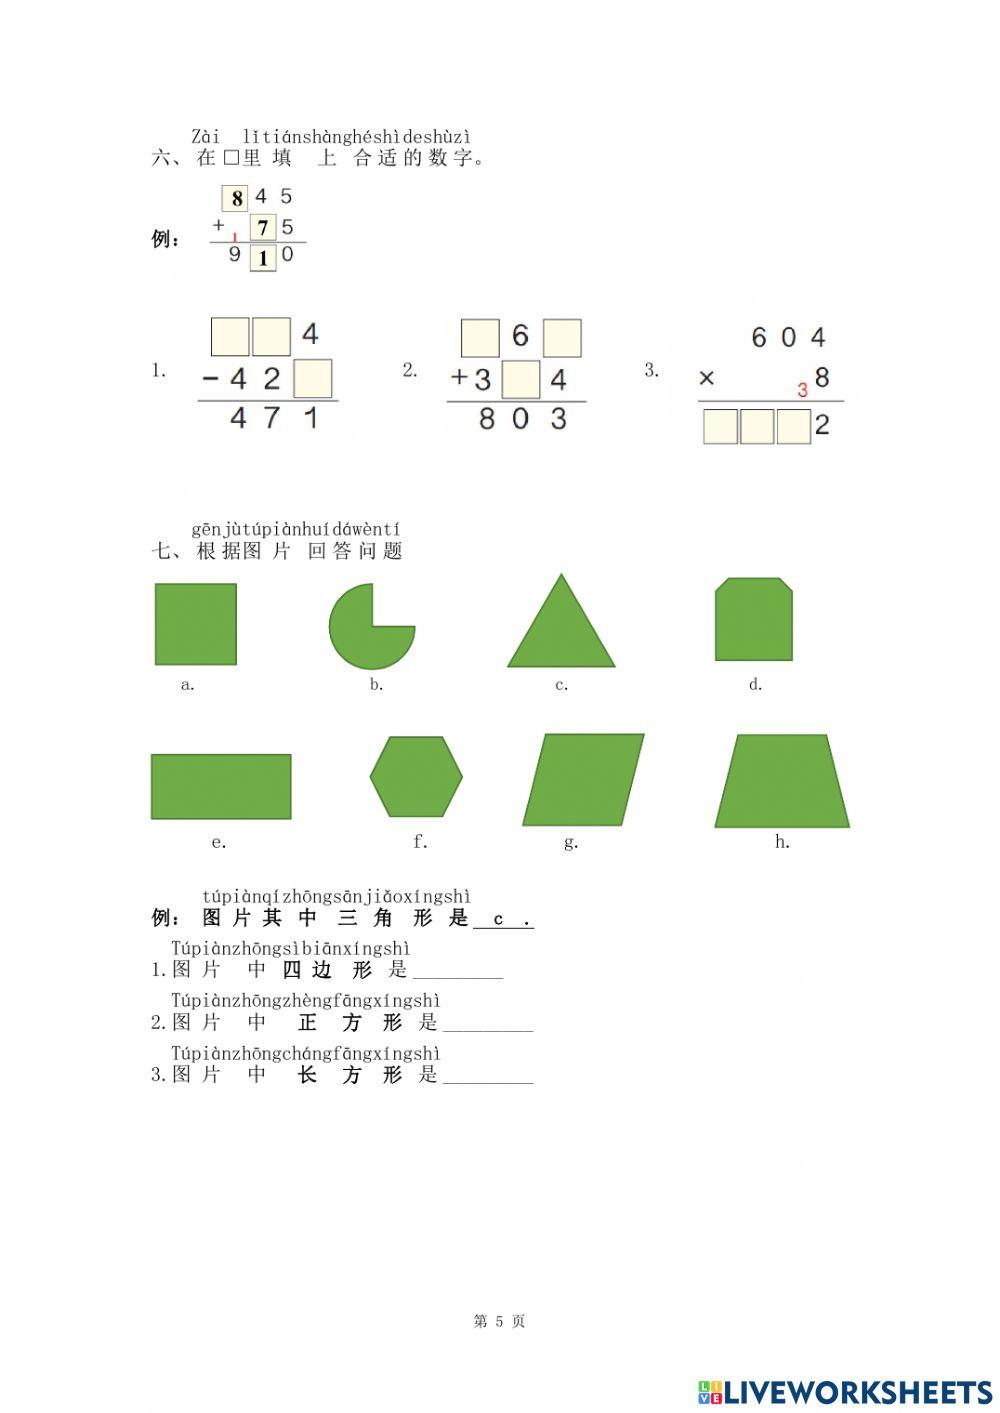 2101 - Test - Chinese (Mathematics) 2-2